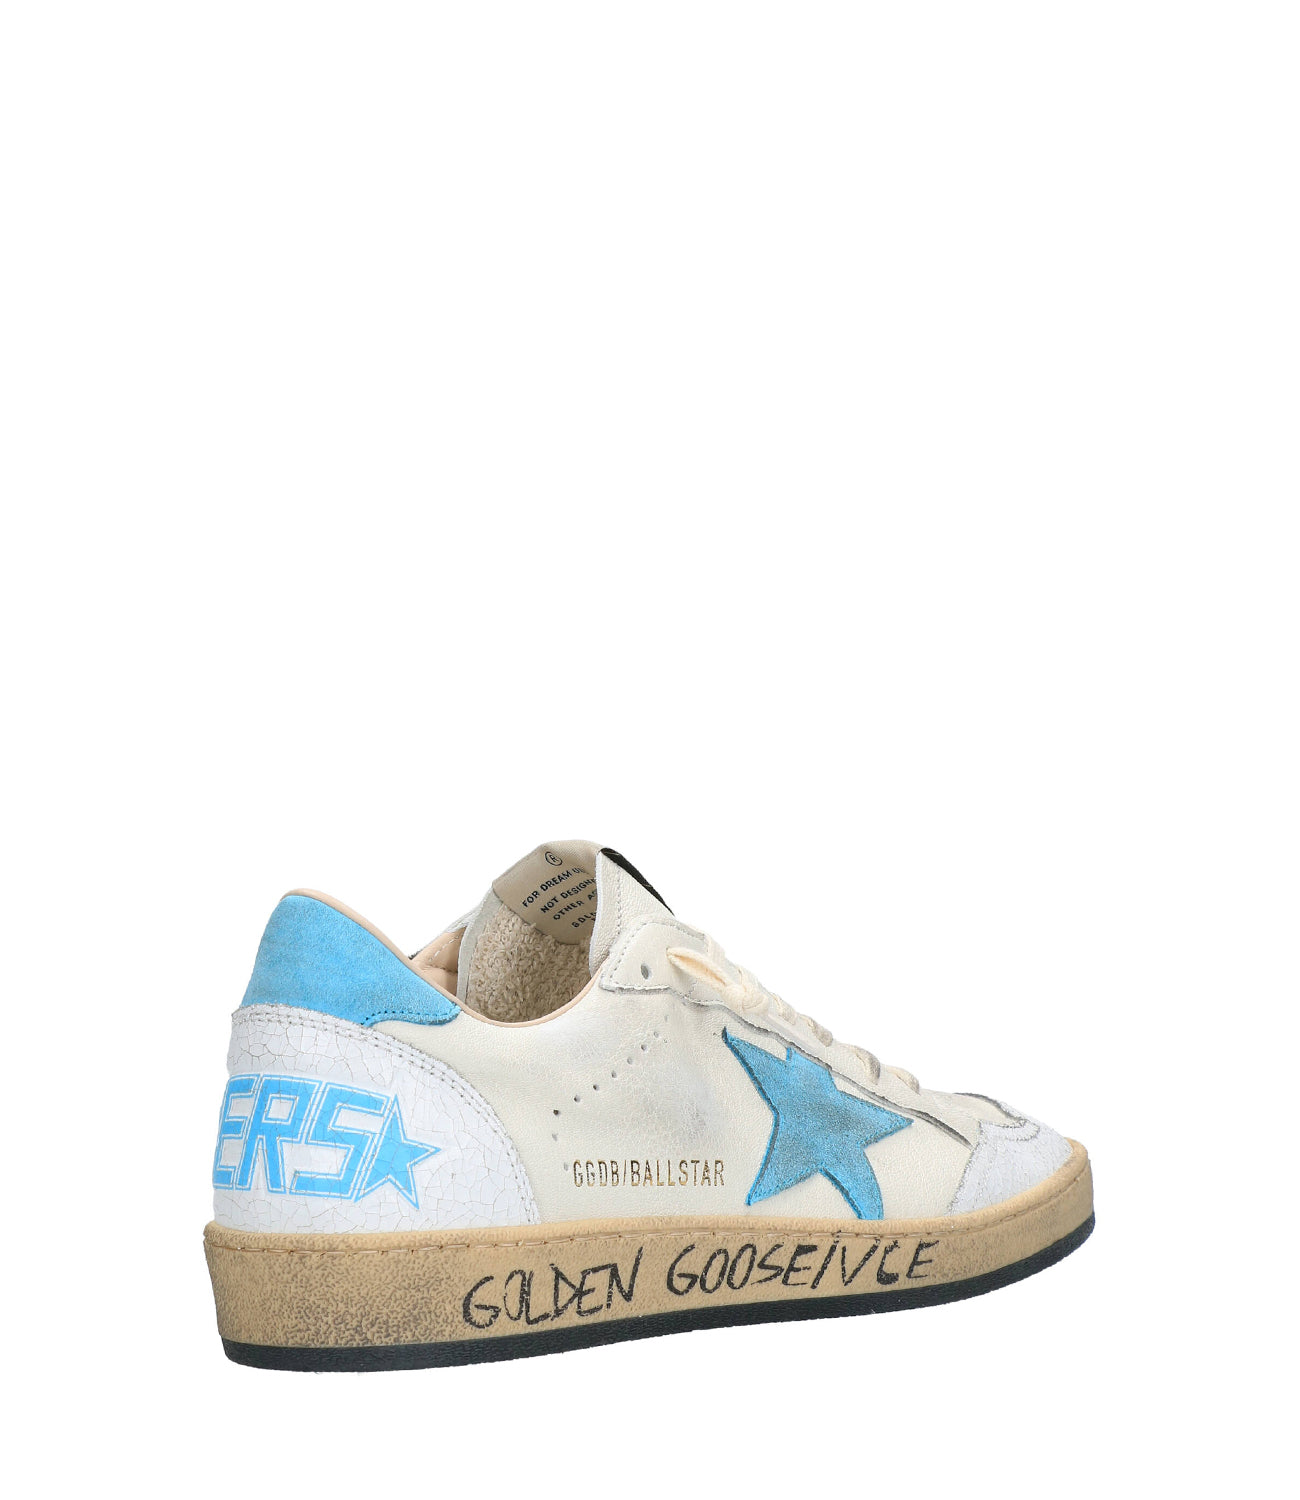 Golden Goose | Ball Star Sneakers White and Light Blue